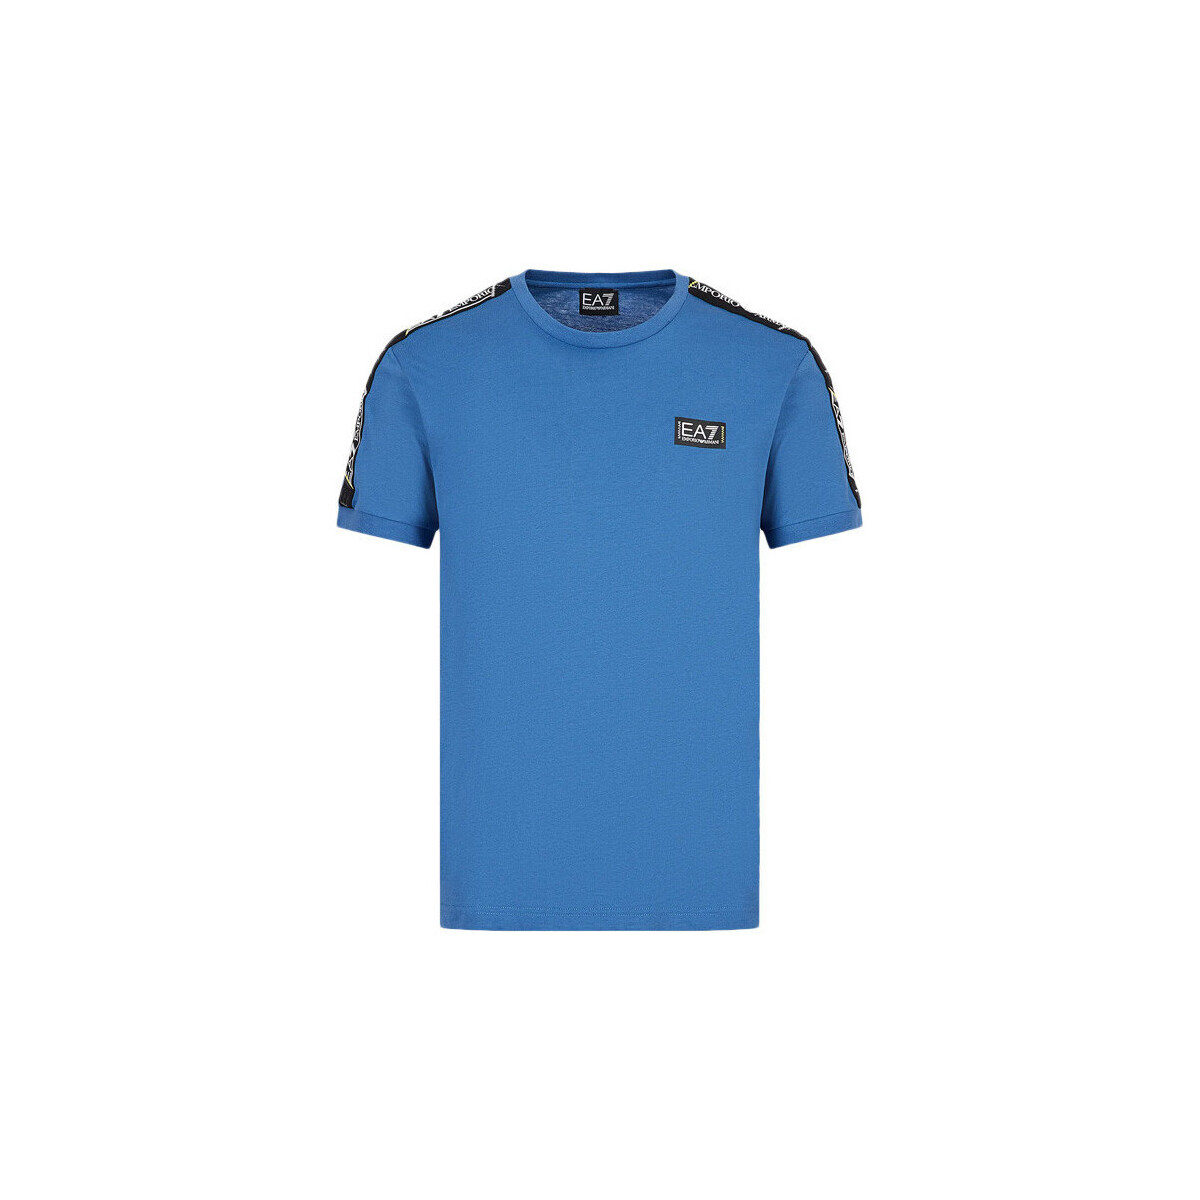 Vêtements Homme womens emporio armani designer Ea7 Emporio Armani Tee-shirt Bleu